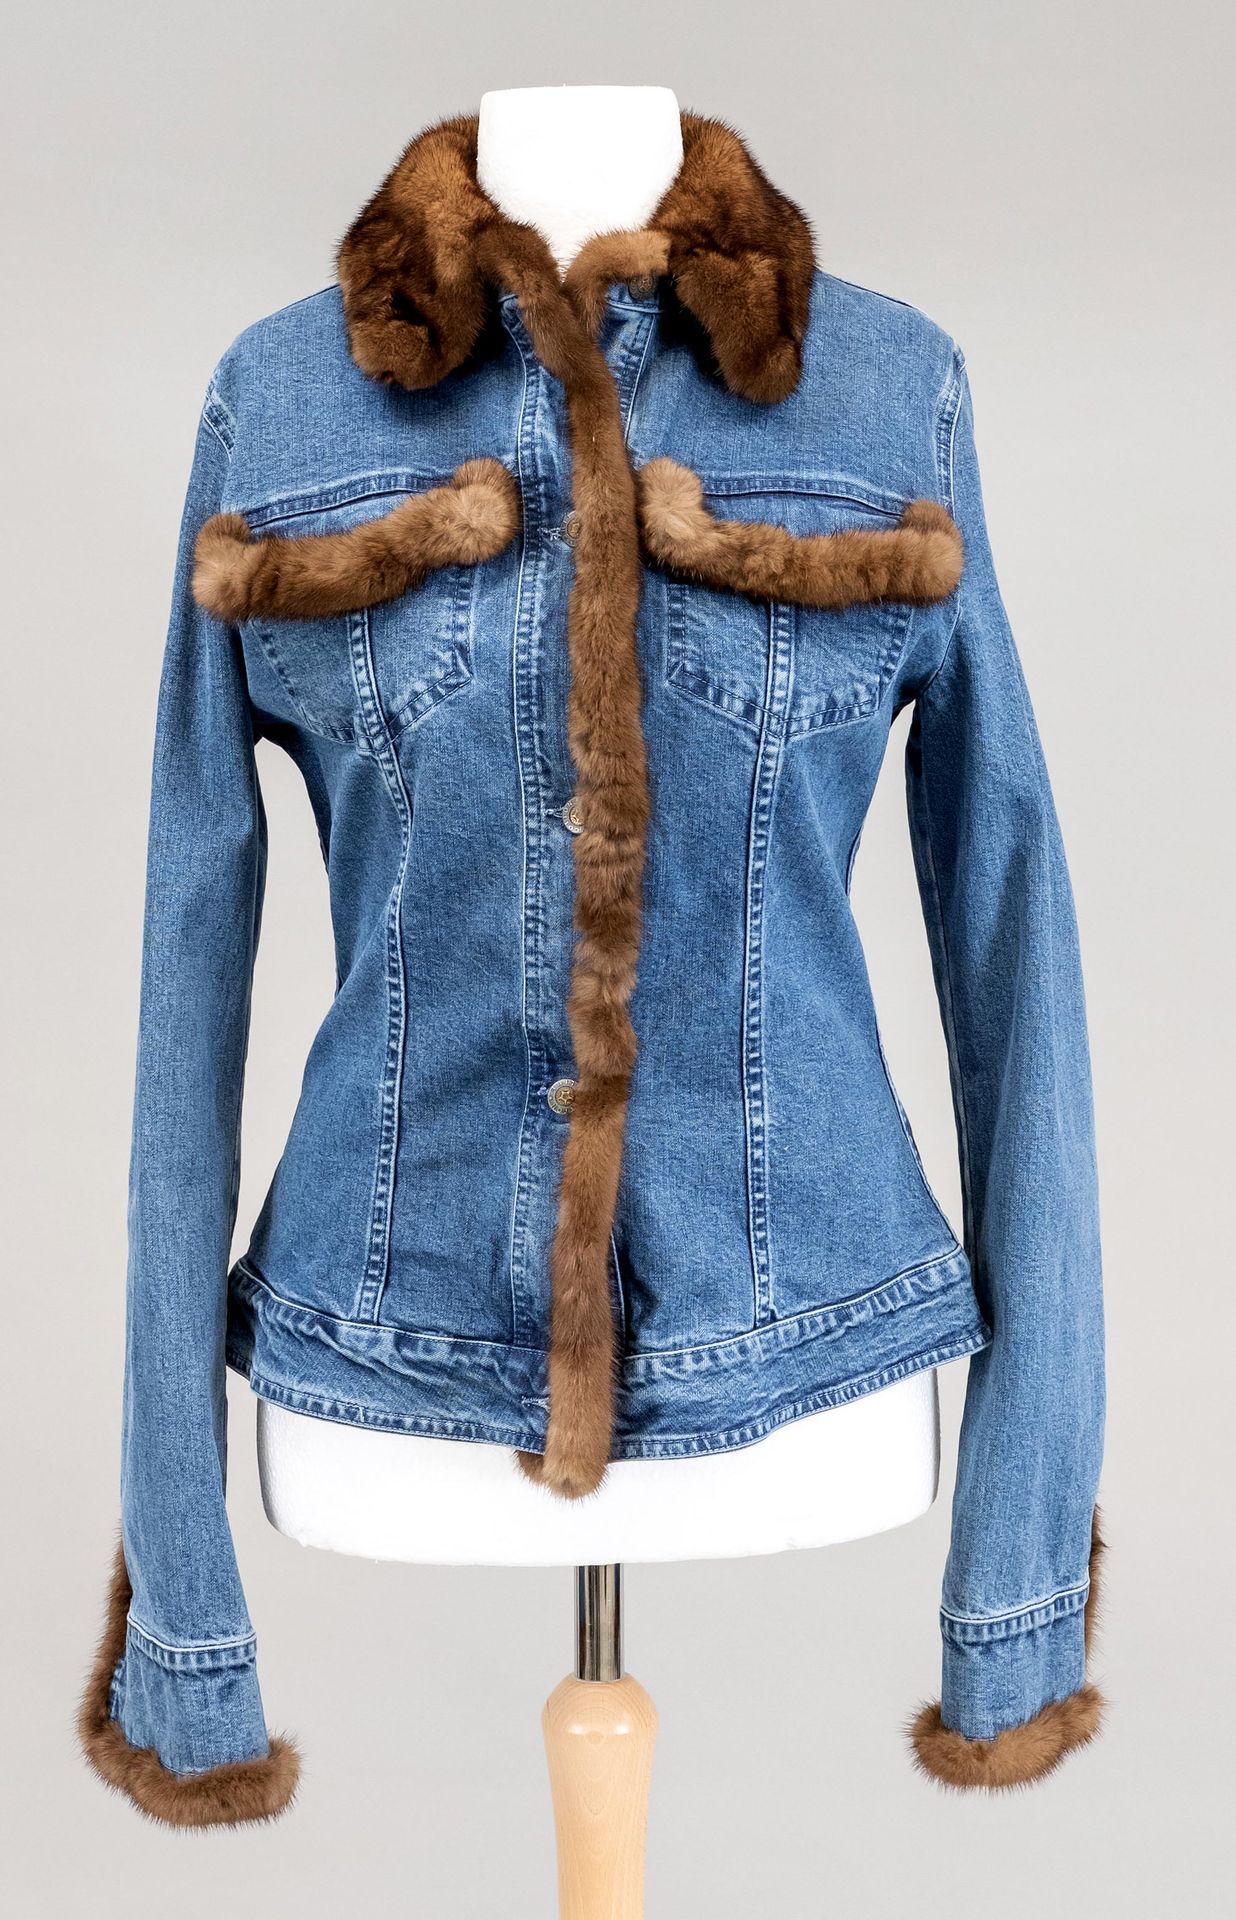 Null 带毛边的女士牛仔夹克，标签标有Kejzars Cotton Line，40号，有轻微磨损痕迹。